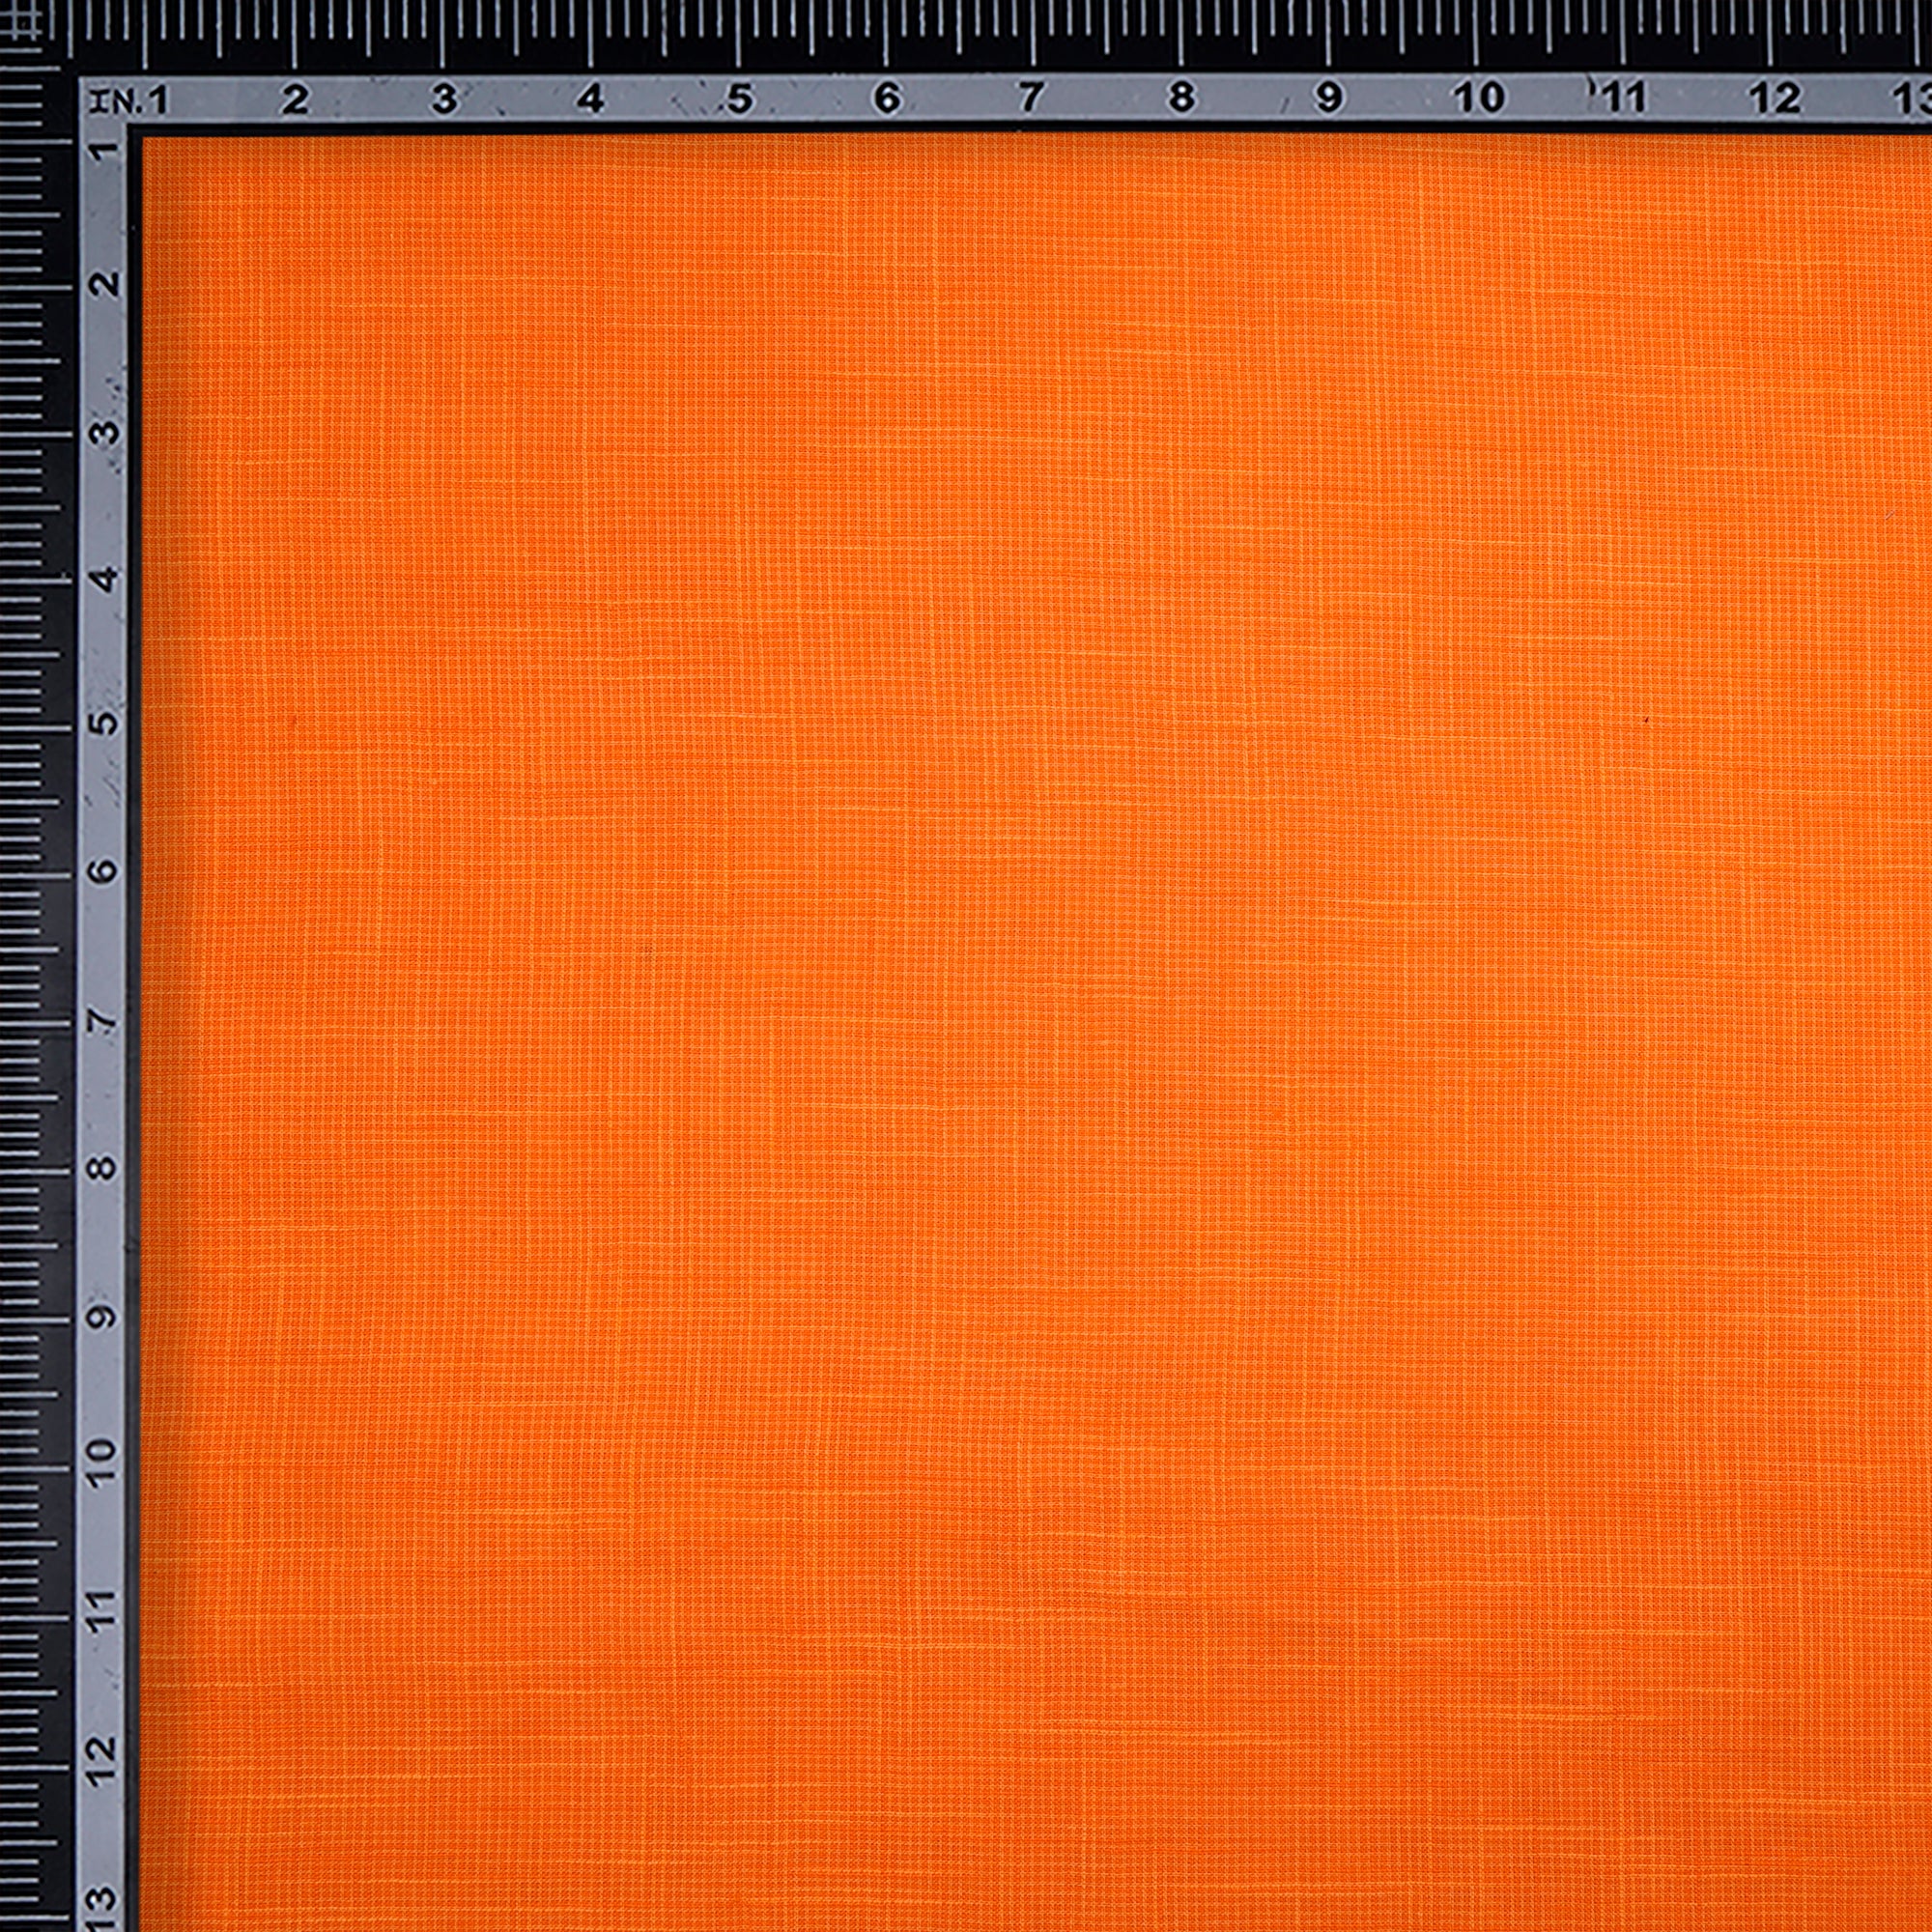 Orange Ikat Pattern Slub Cotton Fabric